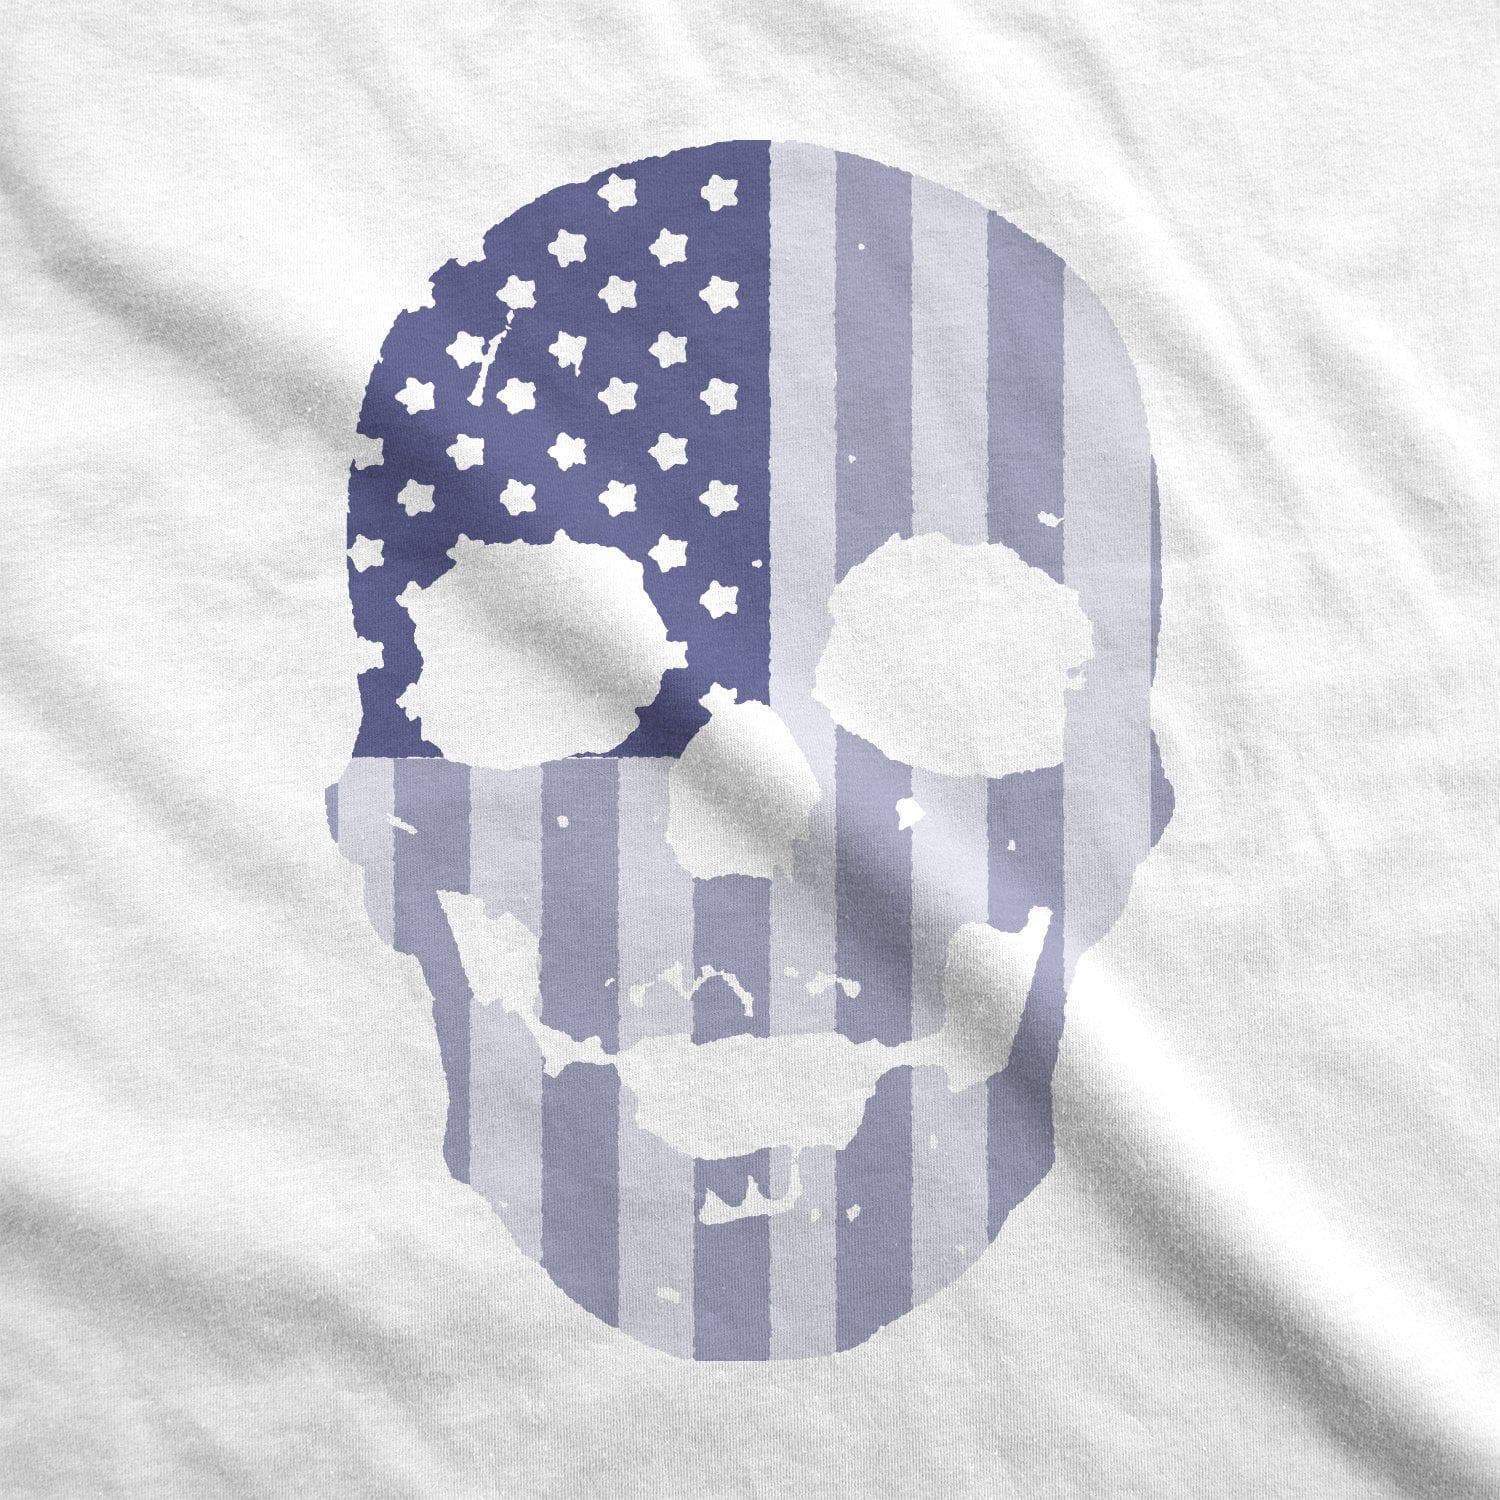 Flag Skull Men's Tank Top  -  Crazy Dog T-Shirts